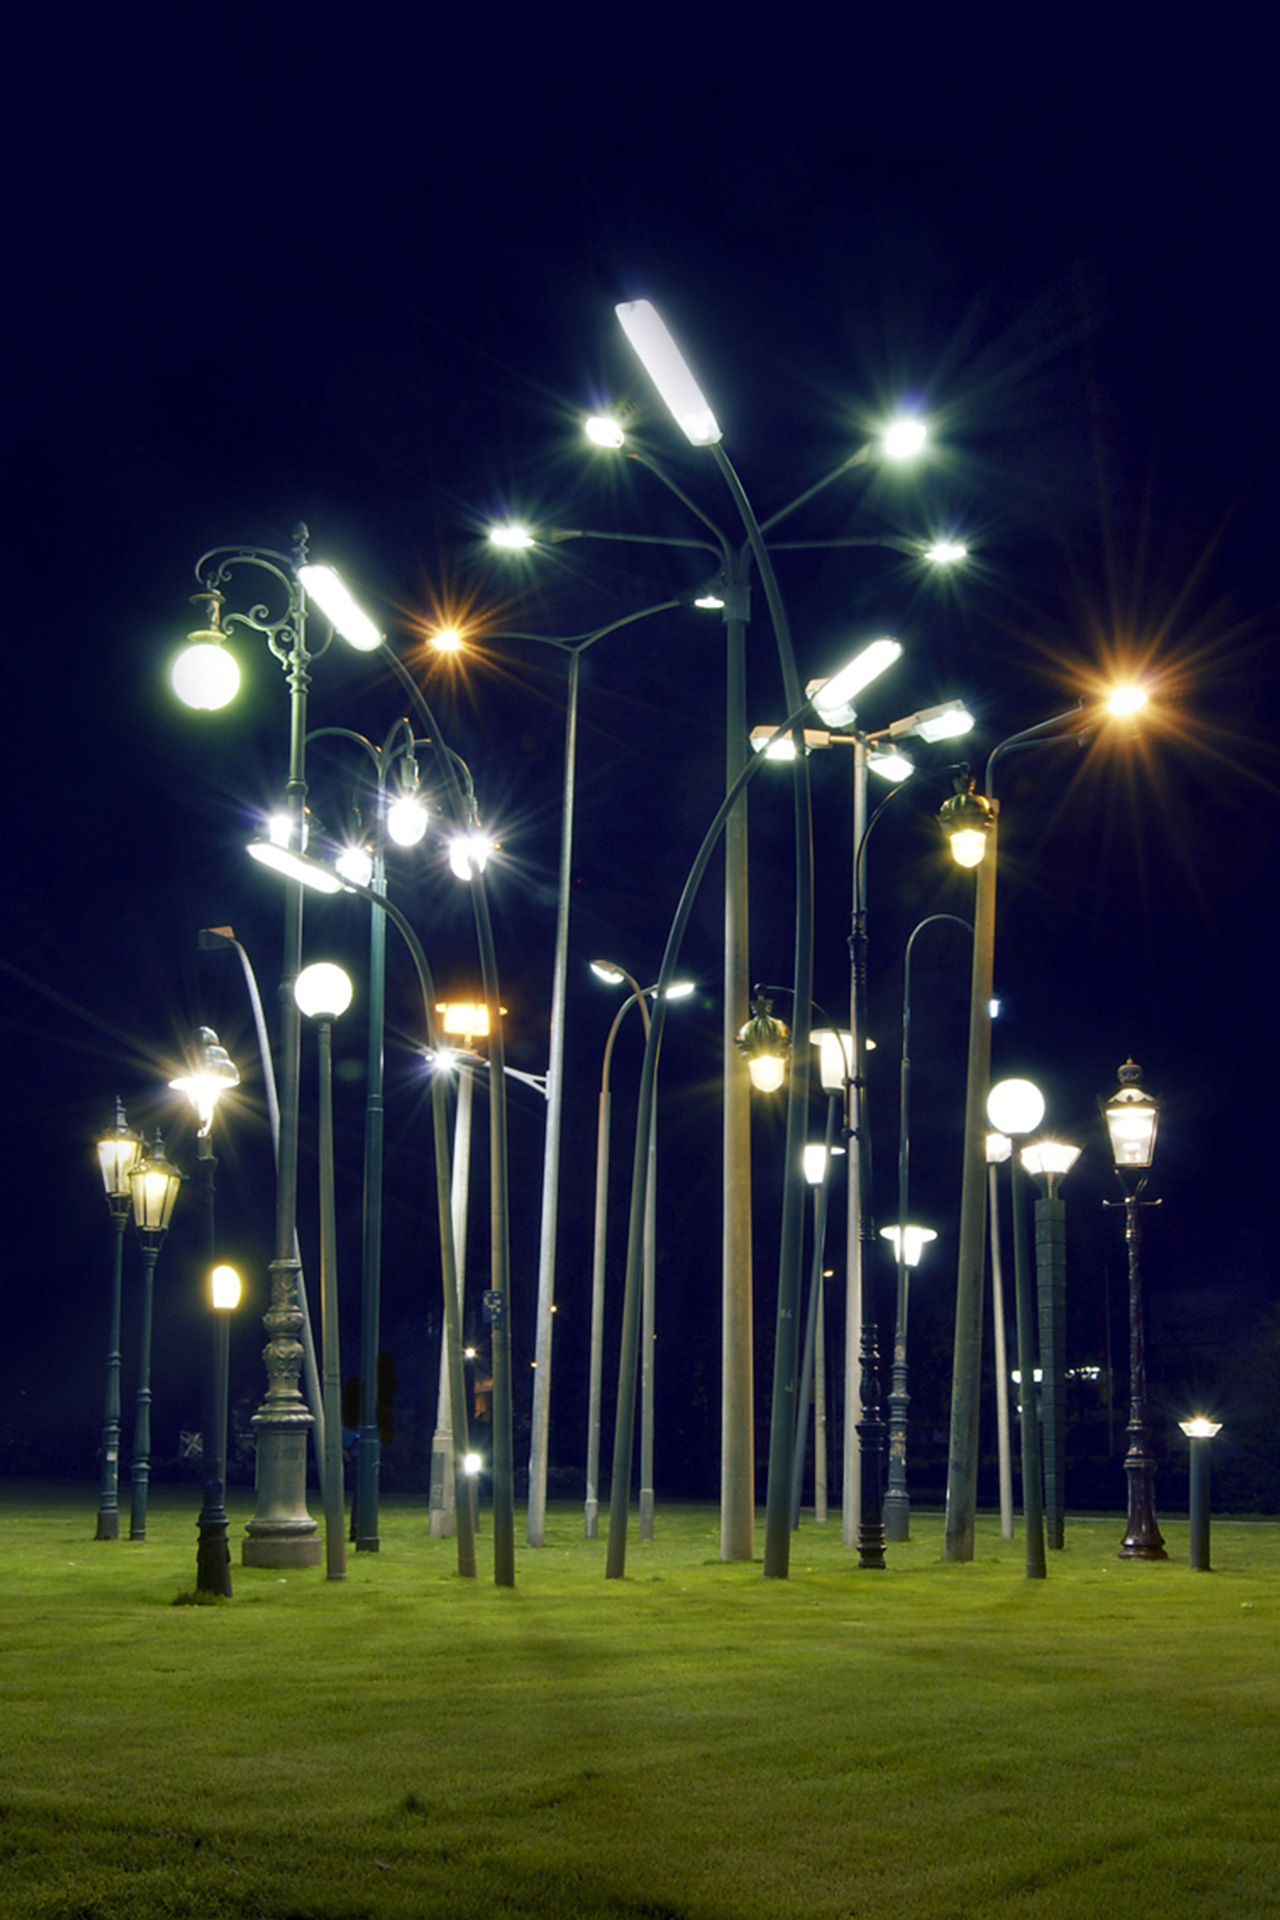 Lighting poles